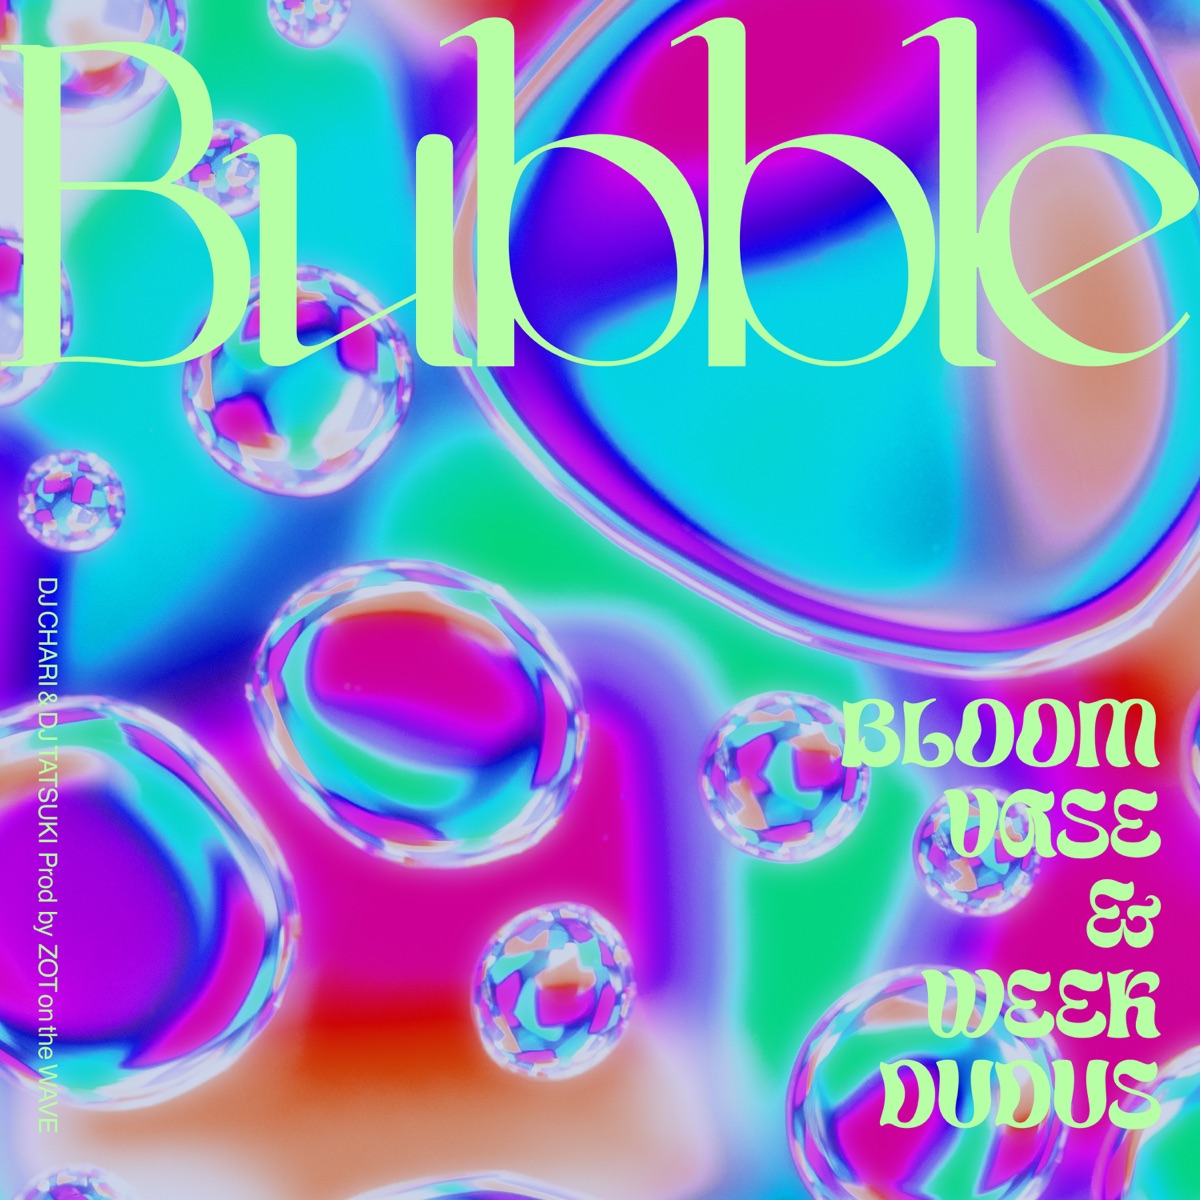 『DJ CHARI & DJ TATSUKI - Bubble (feat. BLOOM VASE & week dudus)』収録の『Bubble (feat. BLOOM VASE & week dudus)』ジャケット